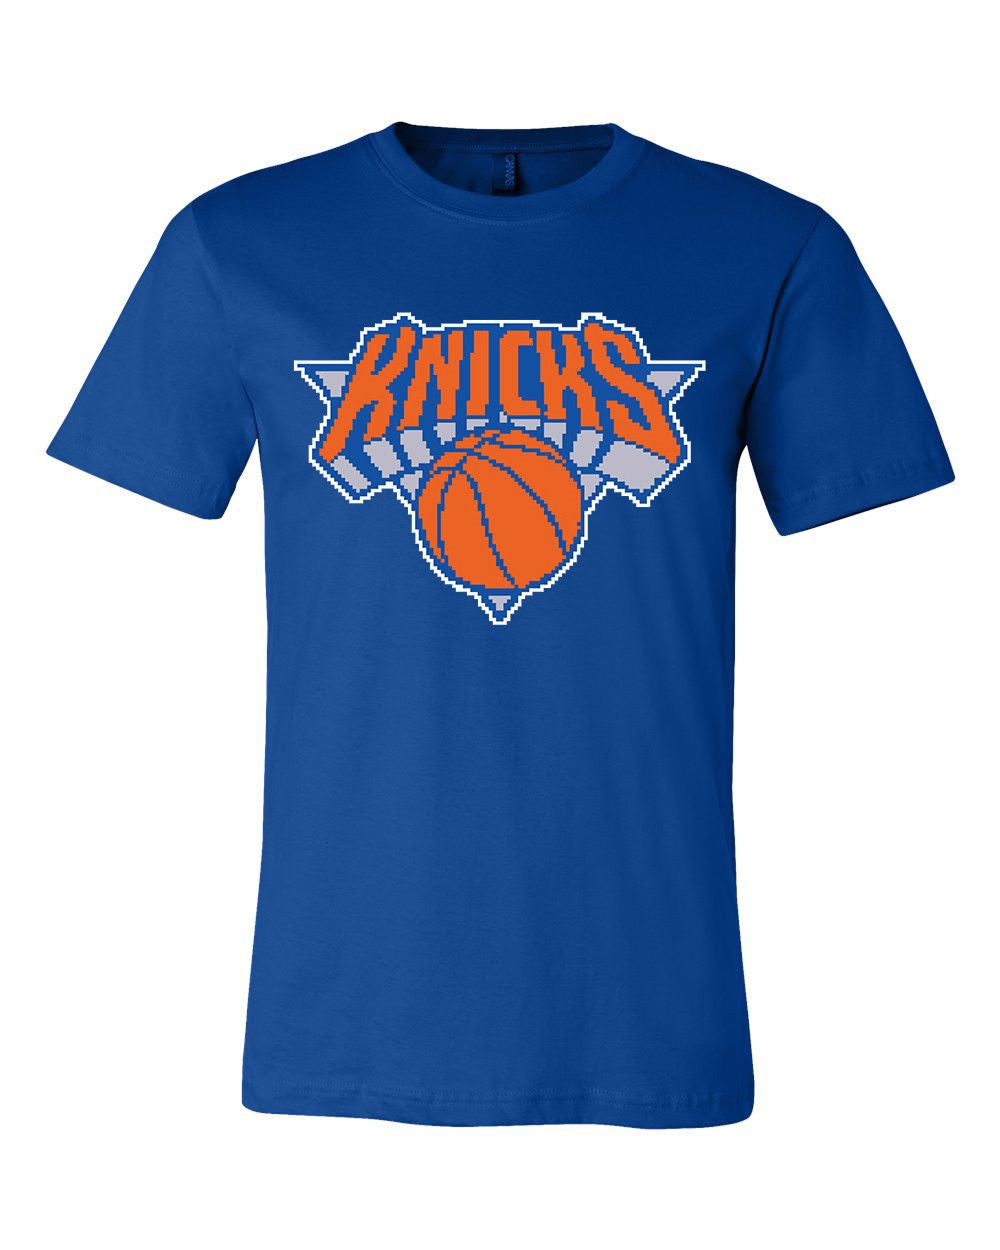 New York Knicks Retro Shorts